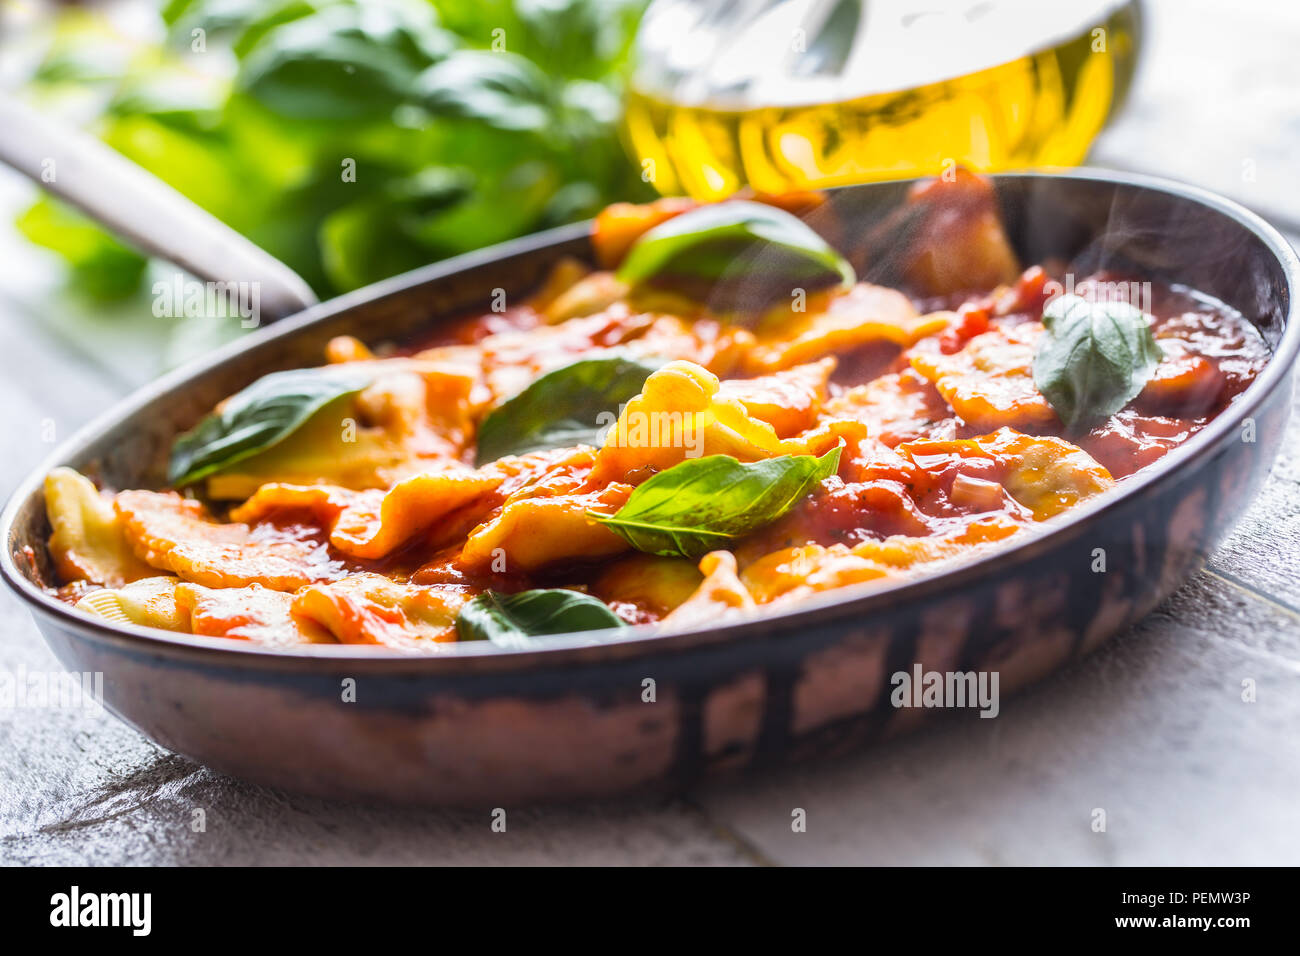 Italian or mediterranean food pasta ravioli of tomato sauce and basil. Stock Photo